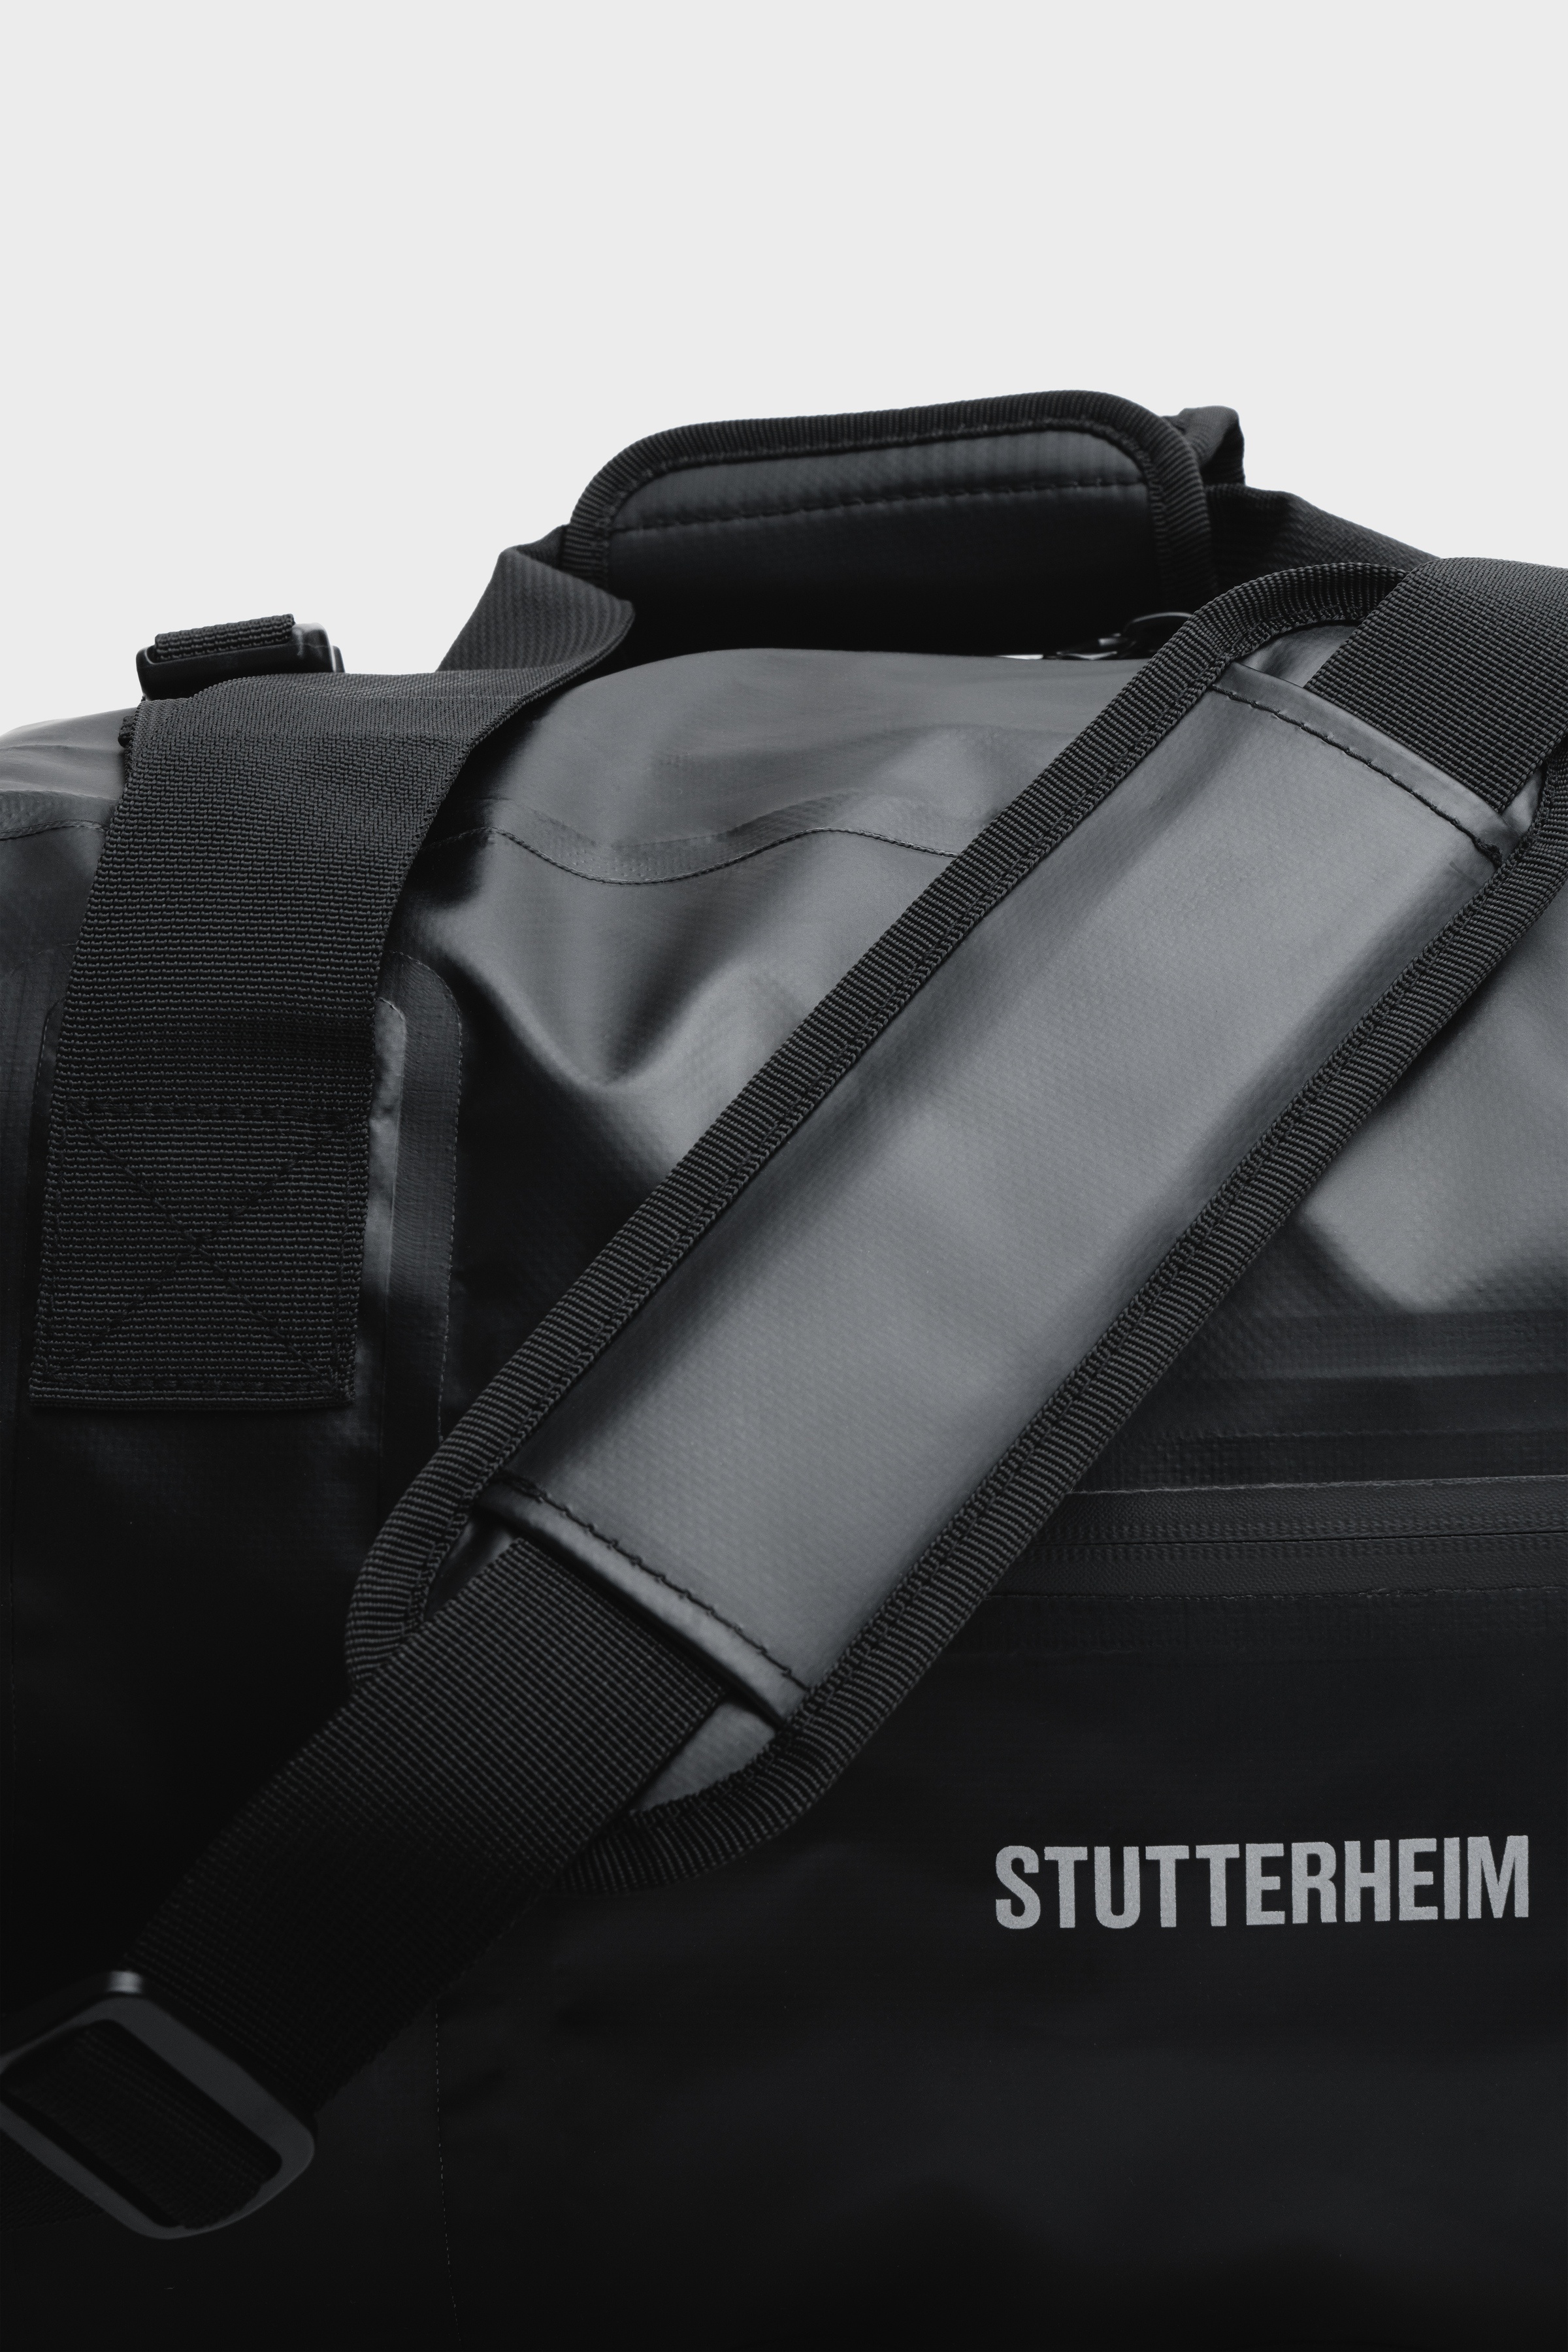 STUTTERHEIM - Wash Bag - Container Small Light Sand - Unisex - Onesize